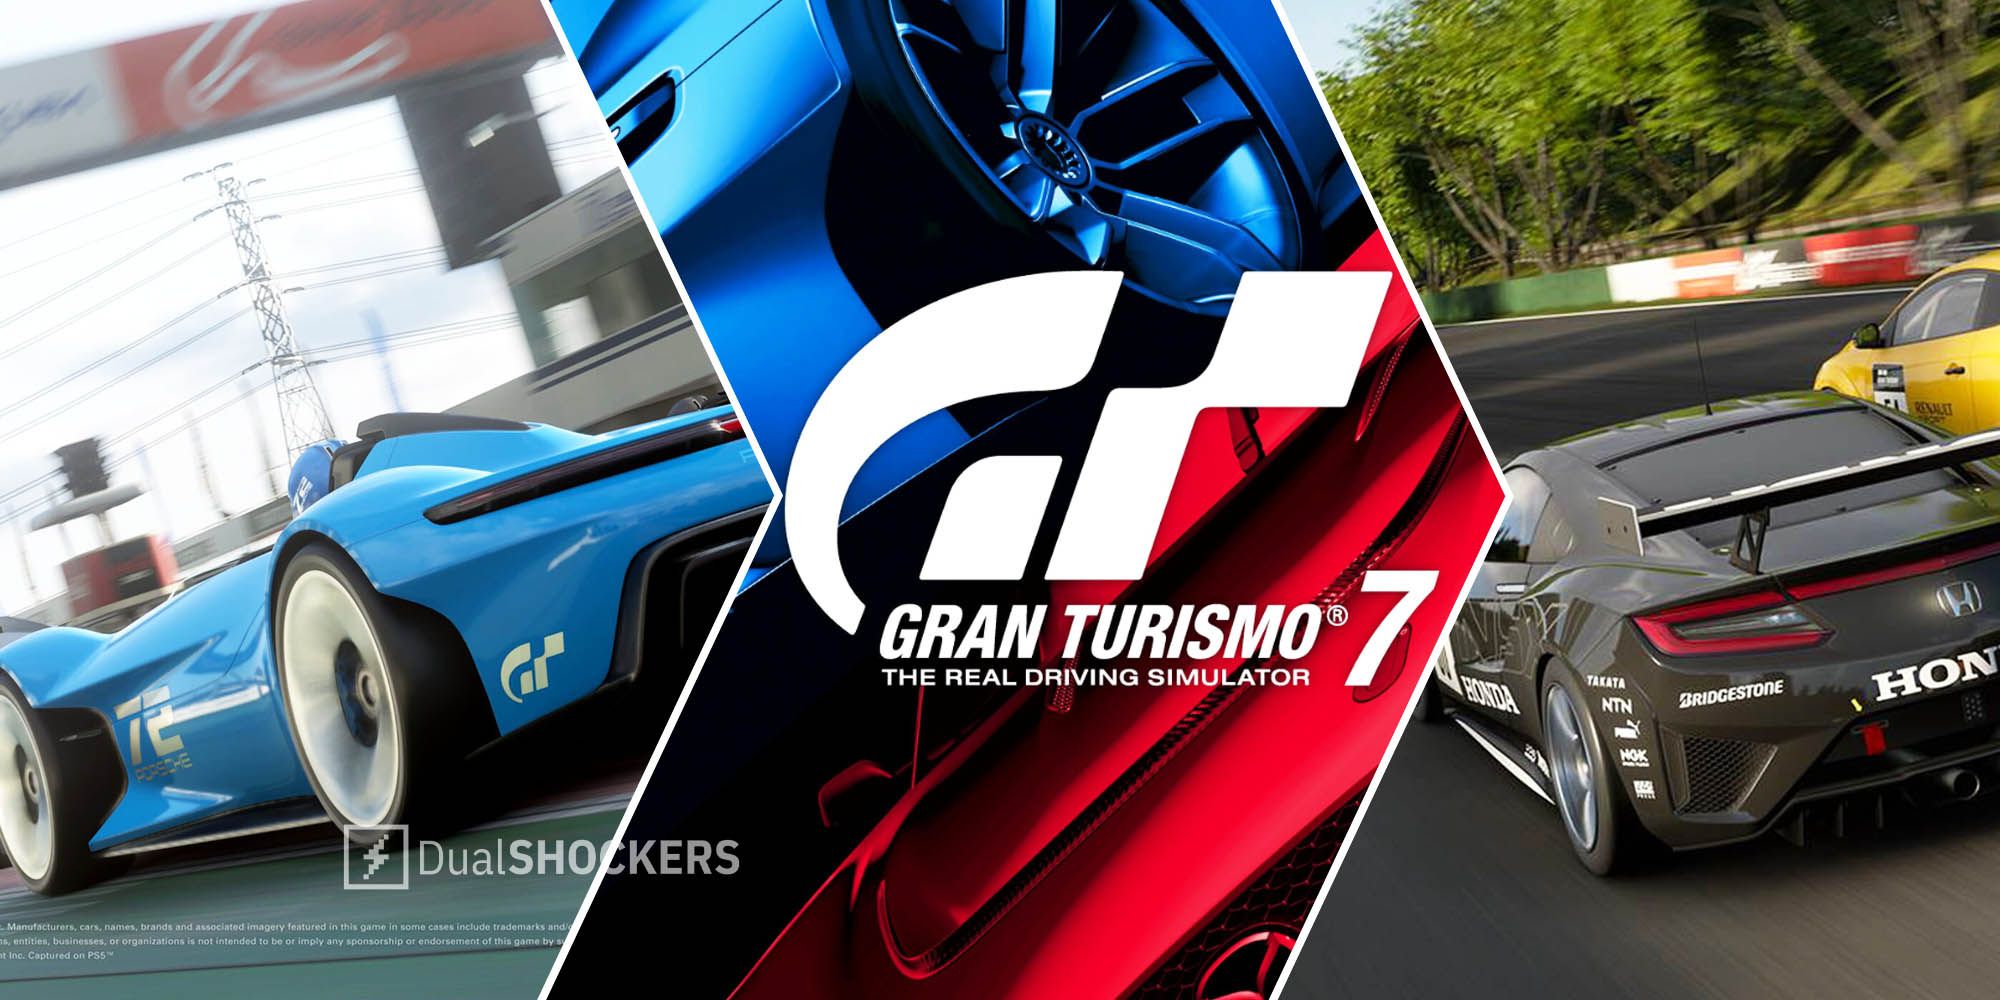 Gran Turismo 7 Blue Porsche and Black Honda racing